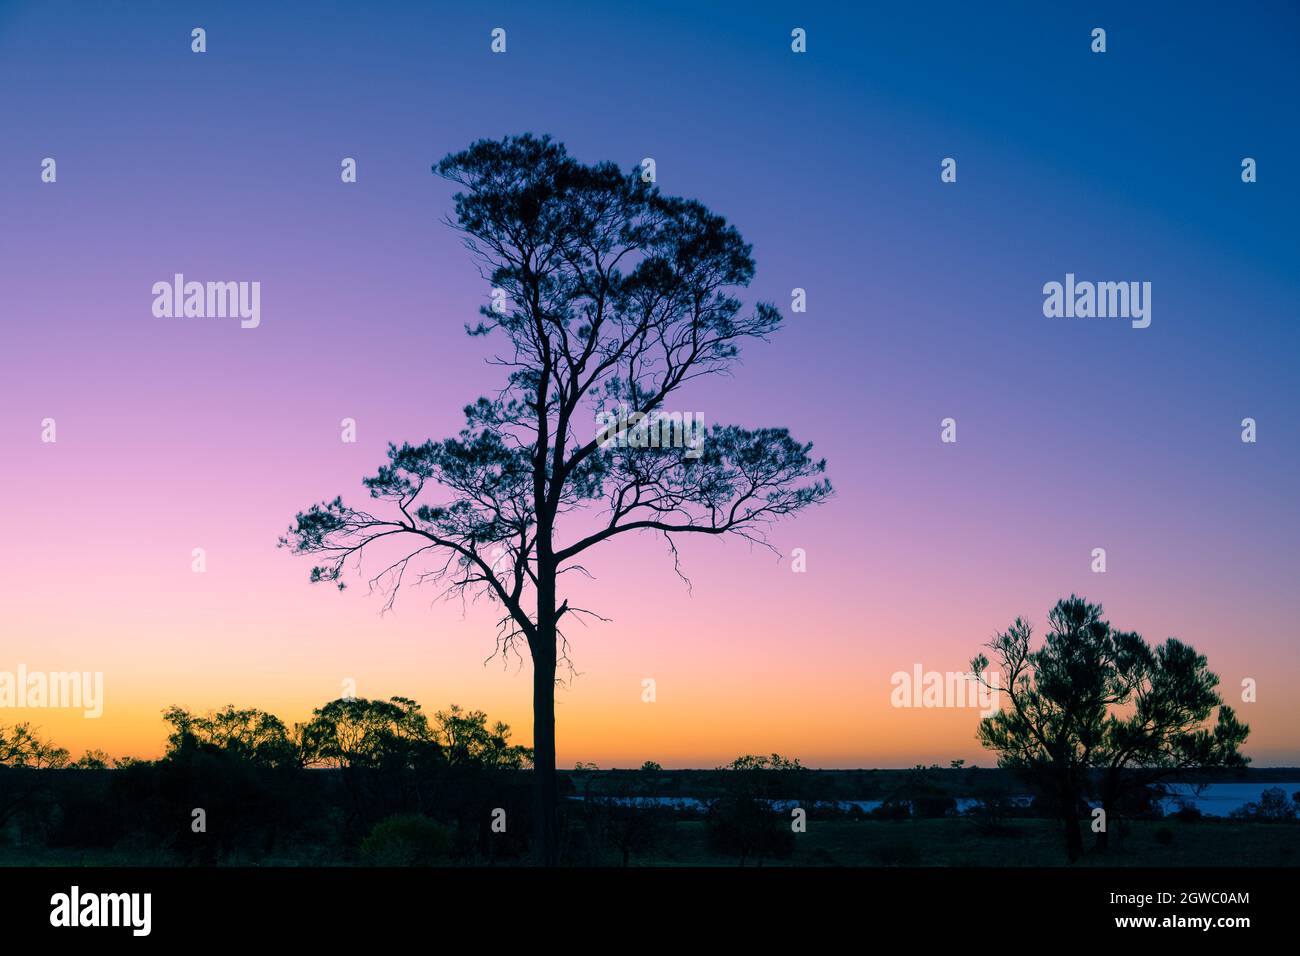 Tree Silhouette At Dusk In Australia Stock Photo